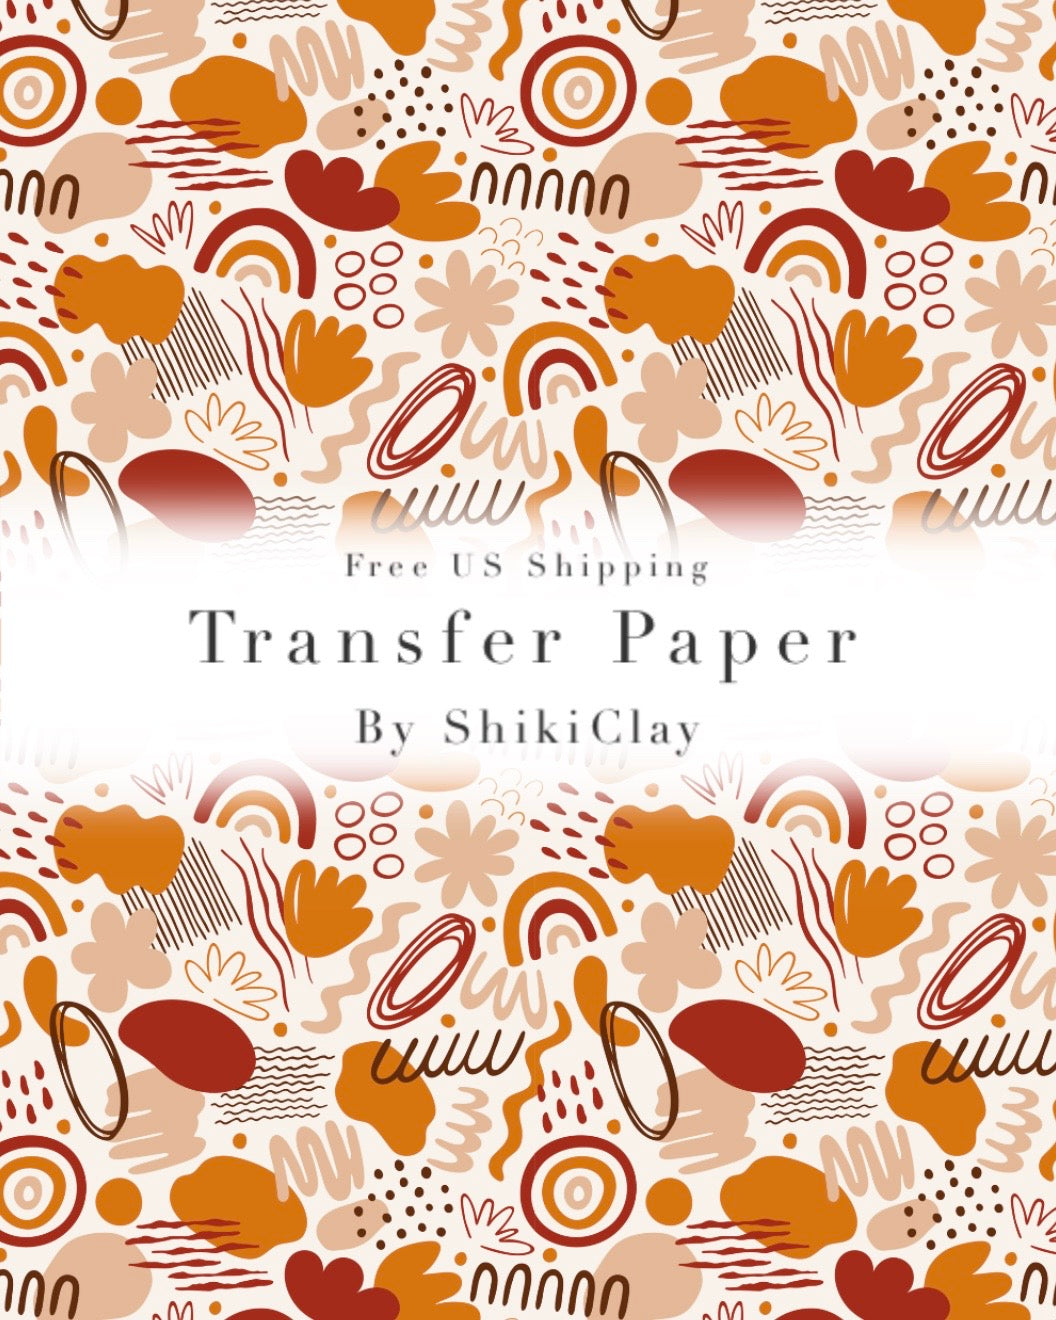 Transfer Paper #41 | polymer clay transfer sheet